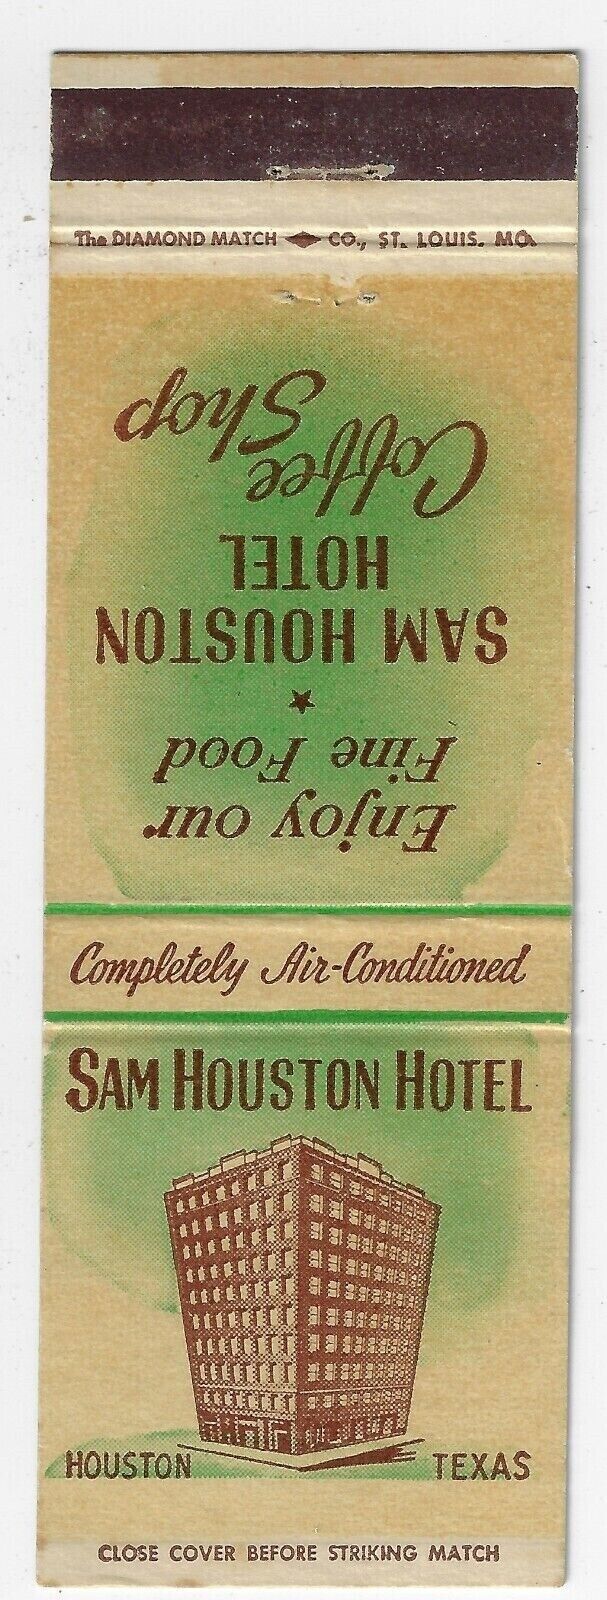 Sam Houston Hotel and Coffee Shop Enjoy Fine Food TexasEmpty Matchcover